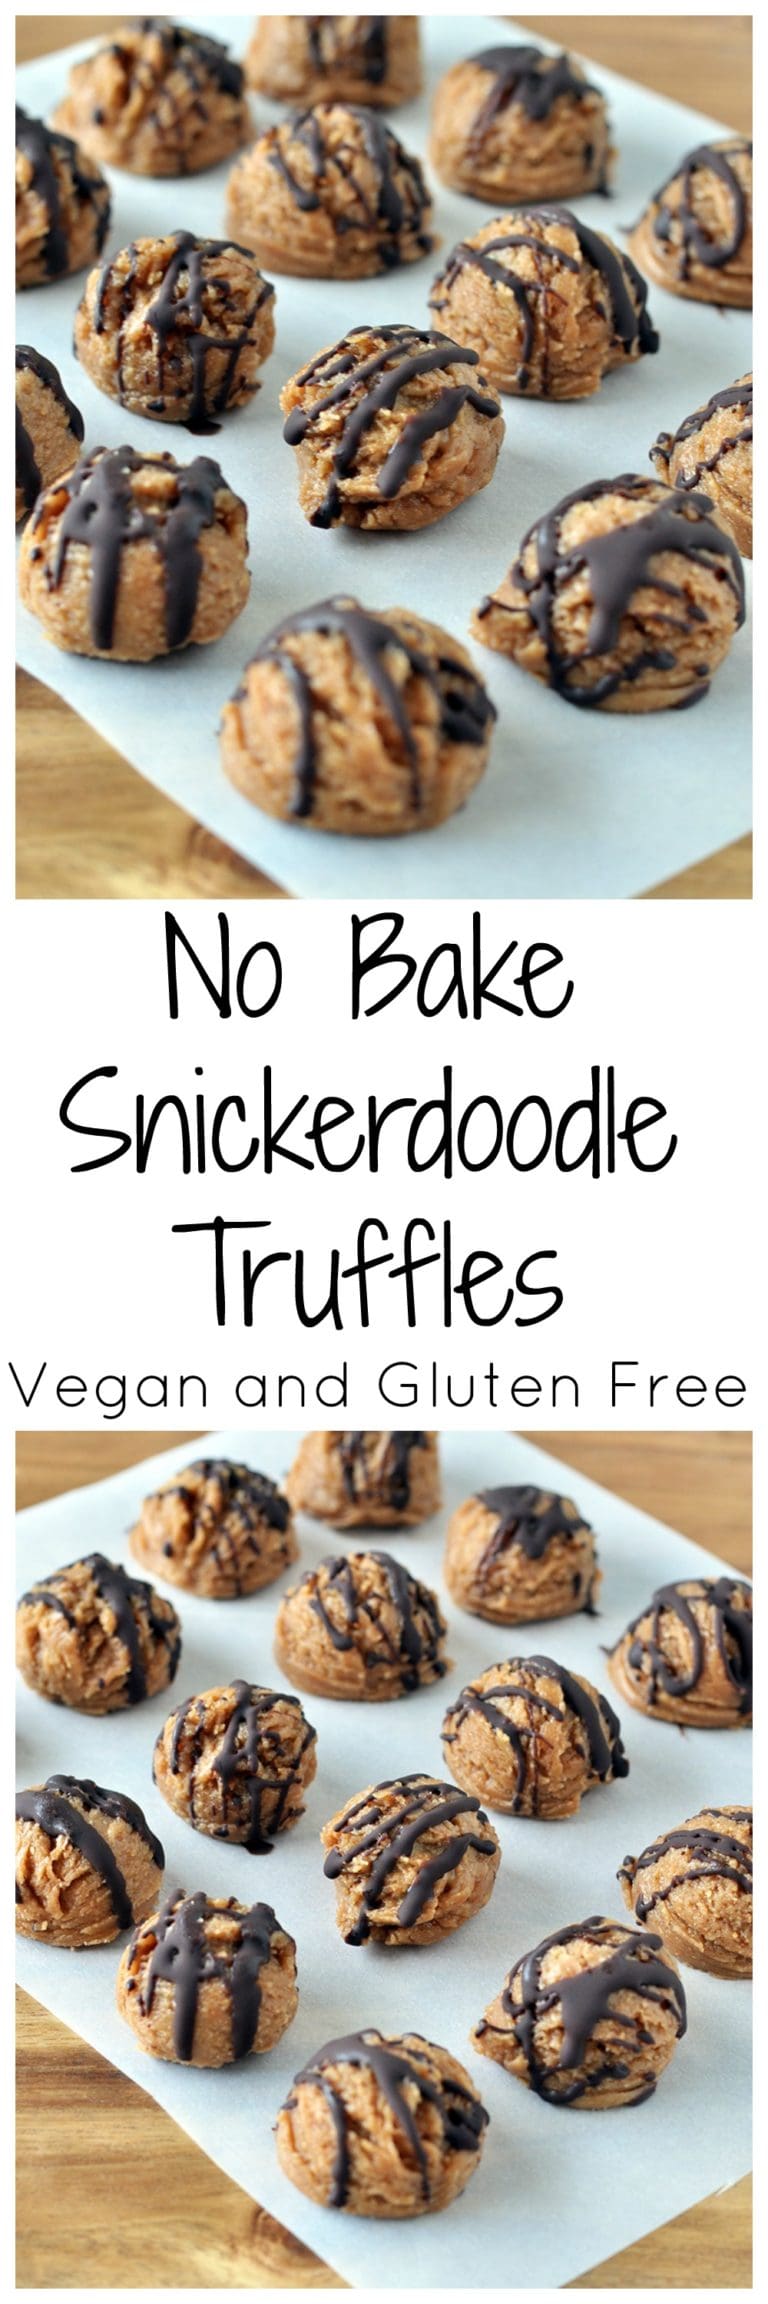 No Bake Snickerdoodle Truffles (Vegan) - My Whole Food Life